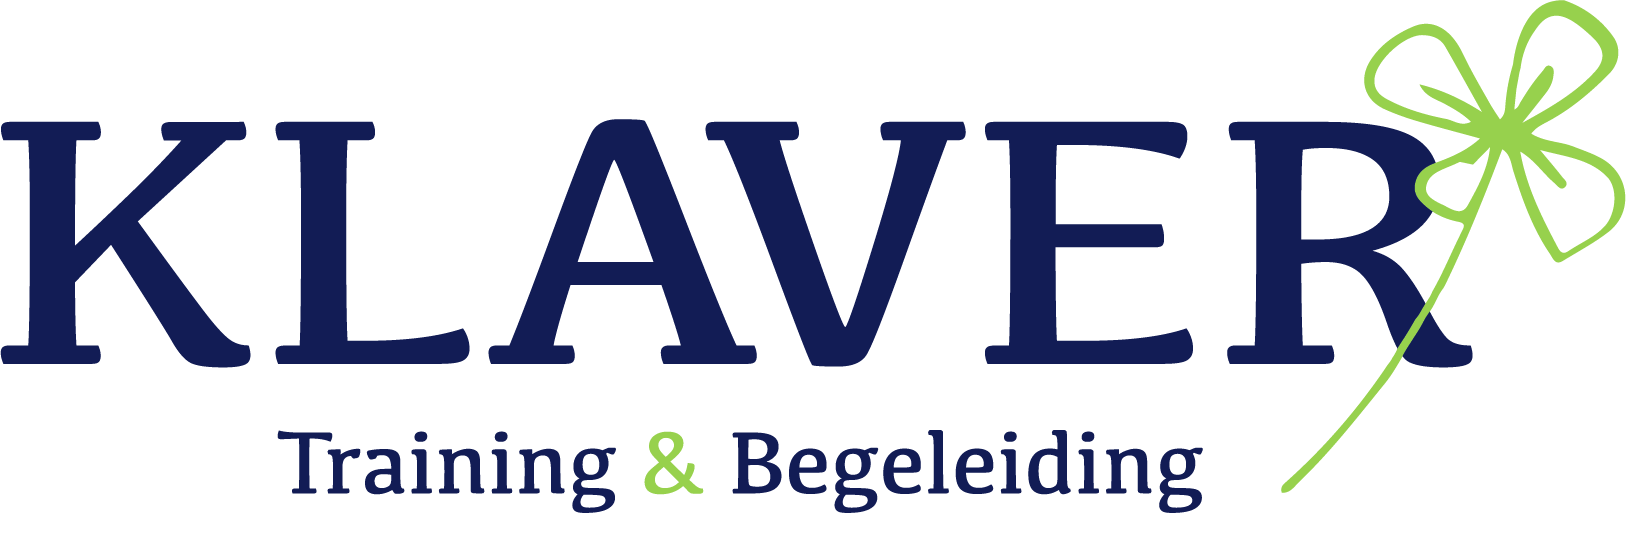 Klavertraining.nl Logo